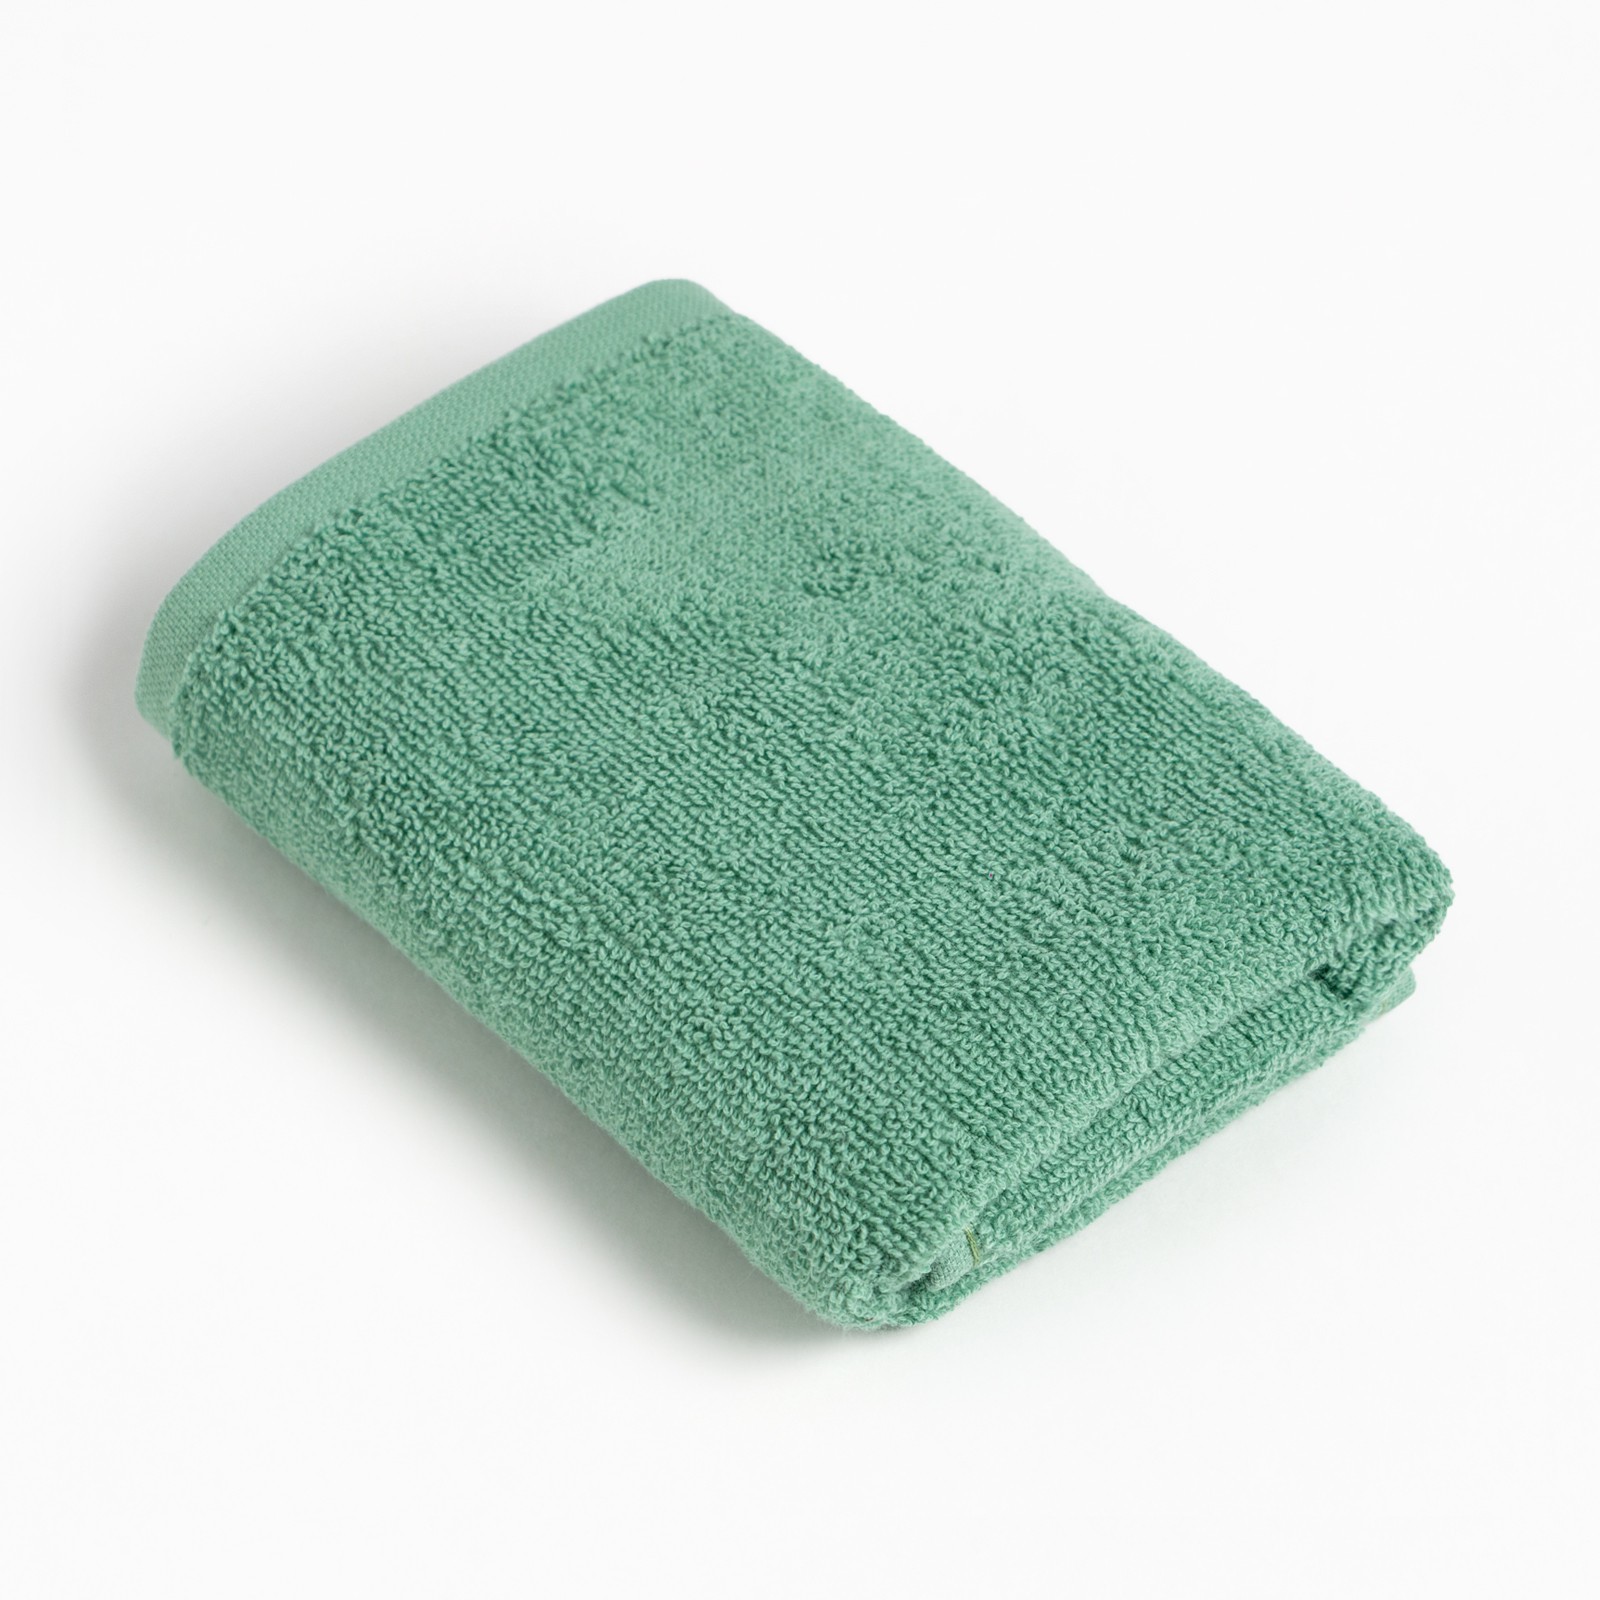 Полотенце Marlena цвет: зеленый (30х60 см), размер 30х60 см tel909945 Полотенце Marlena цвет: зеленый (30х60 см) - фото 1